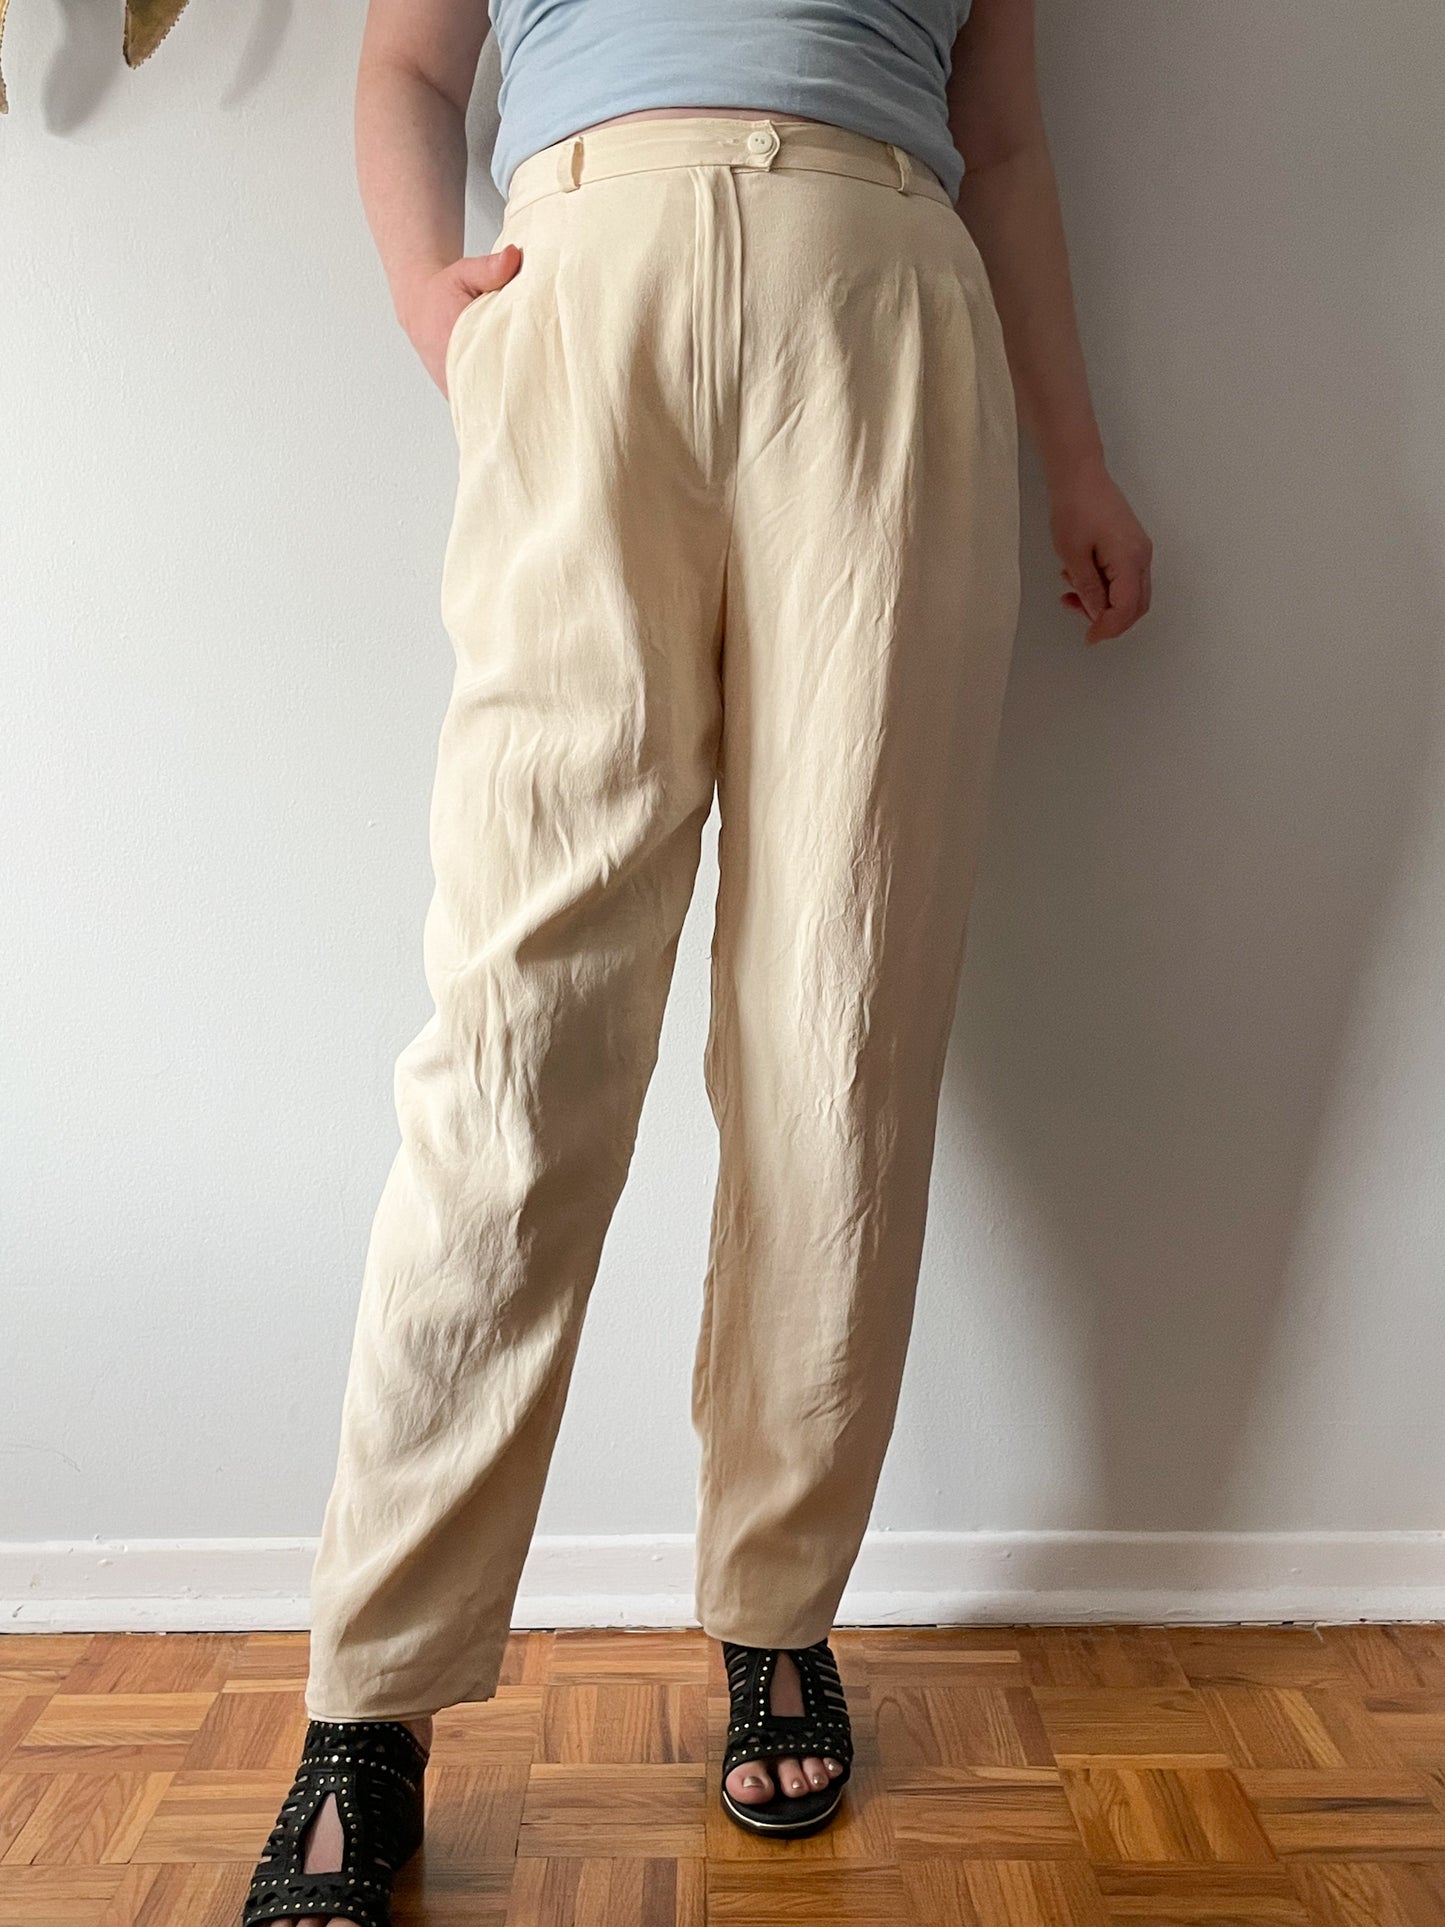 Vintage Bianca Nygard Cream 100% Silk High Rise Trouser Pants - Size 12